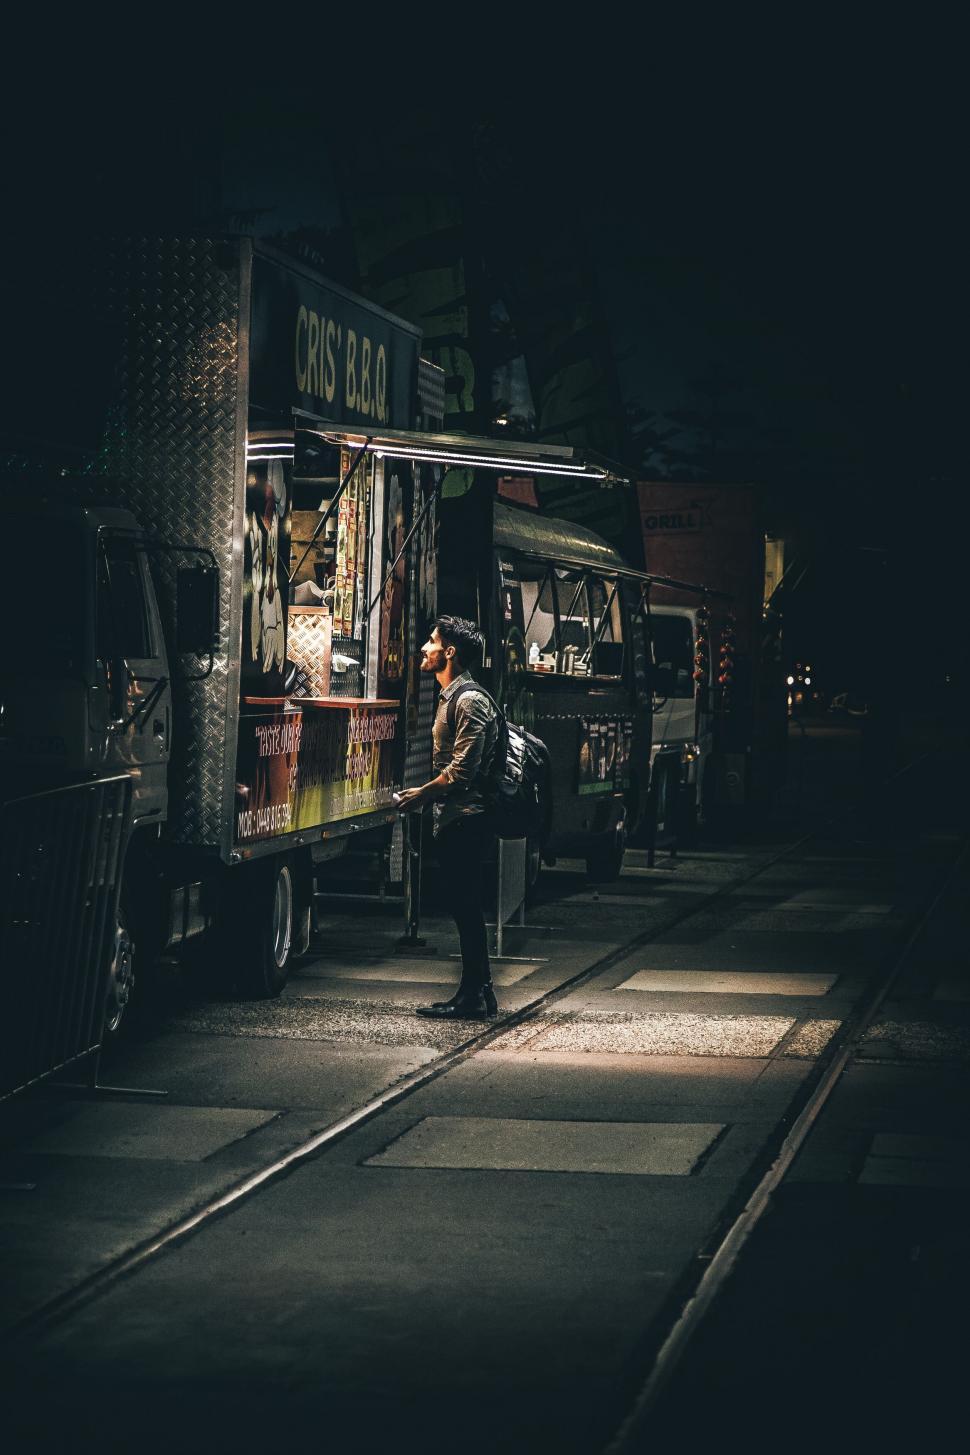 Free Image of Street food vendor at night 